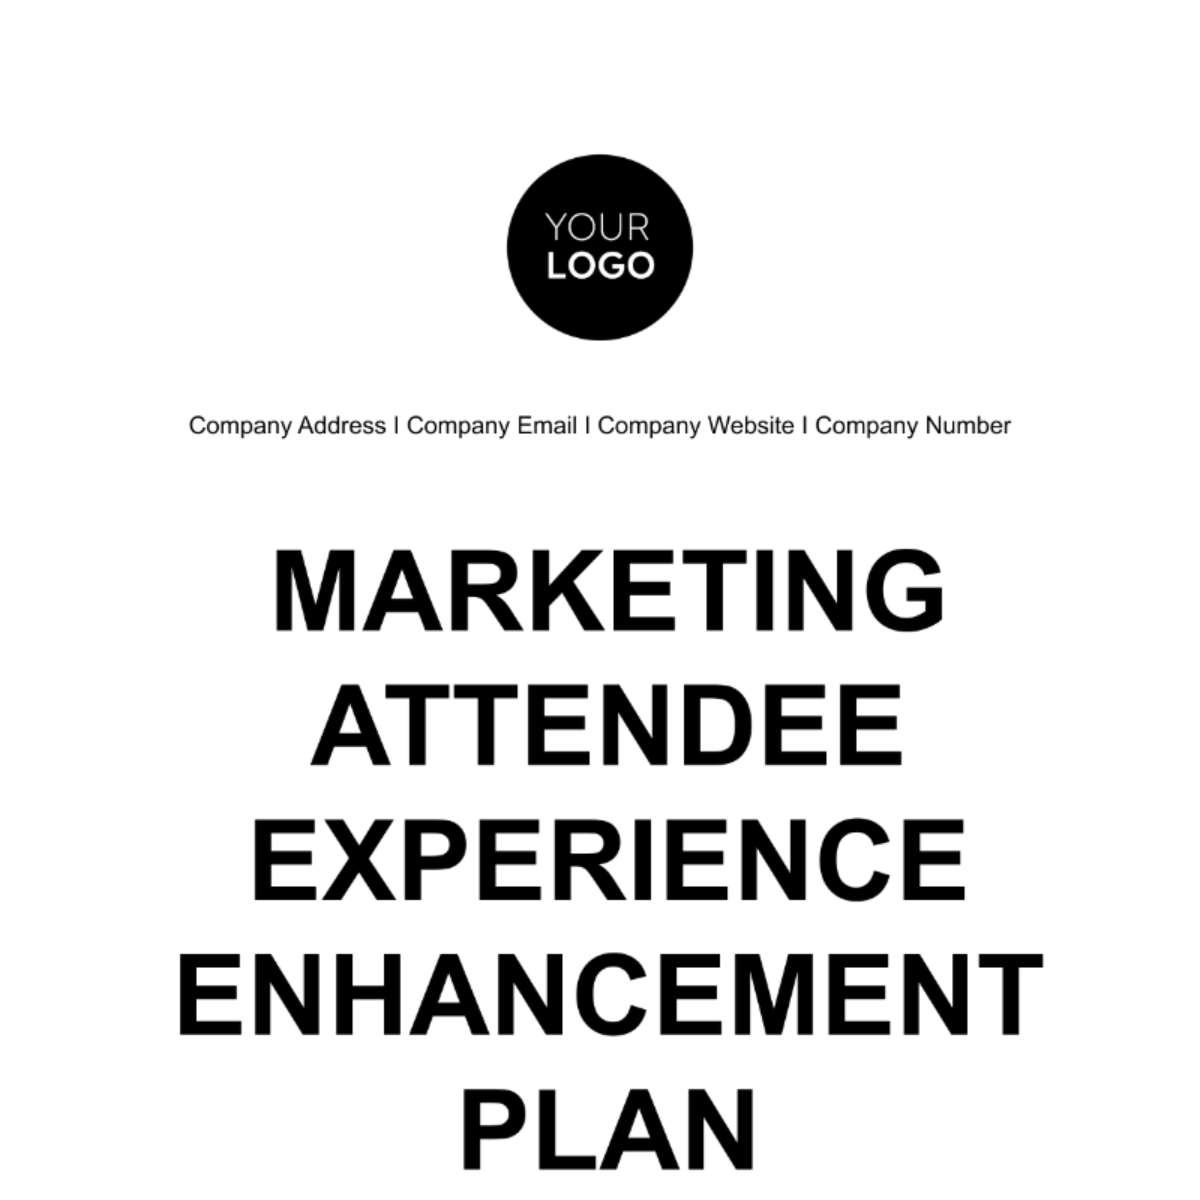 Marketing Attendee Experience Enhancement Plan Template